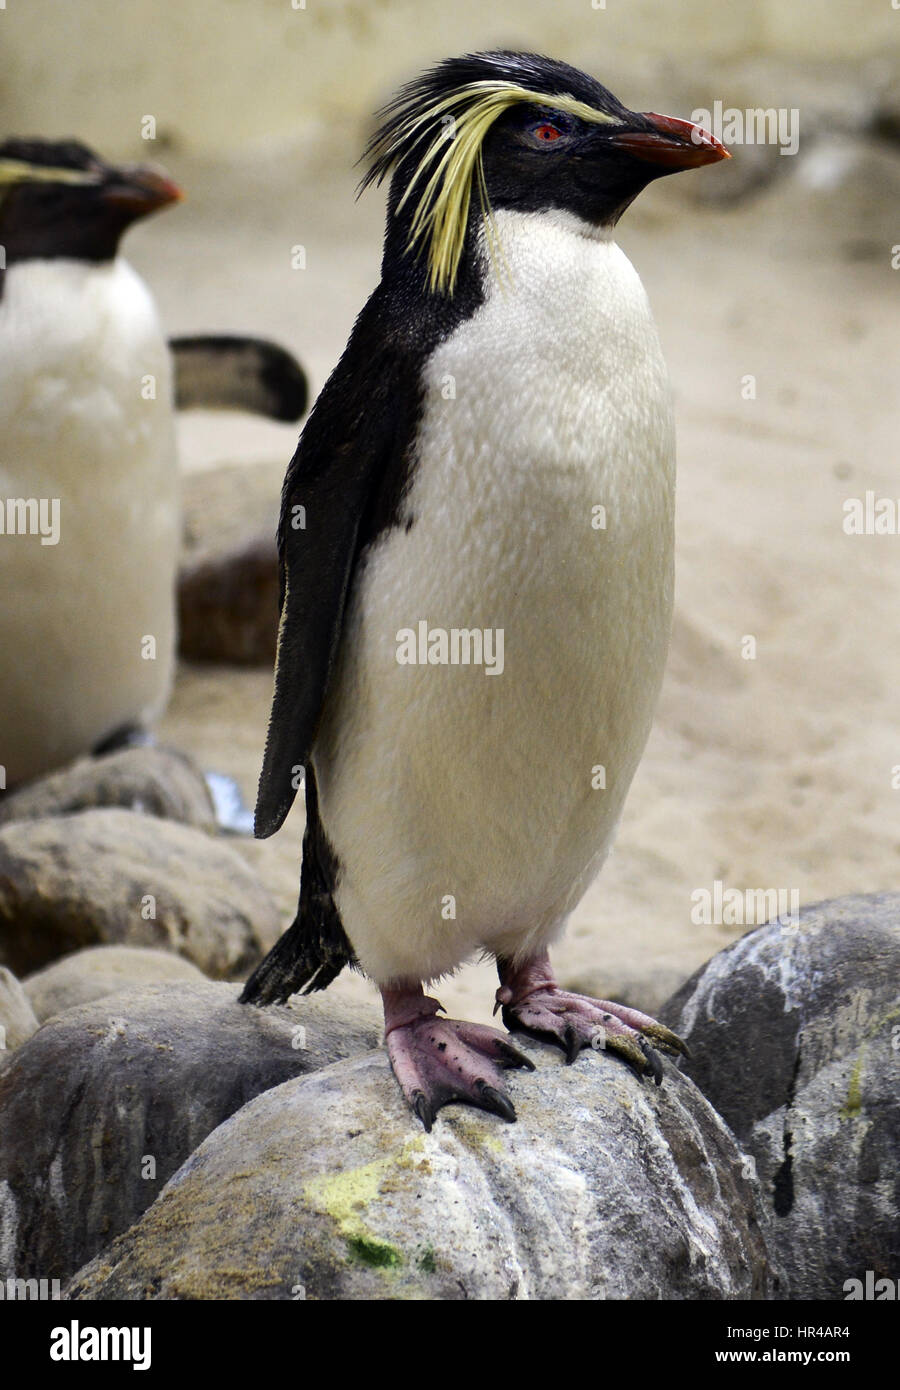 Rockhopper Penguins in Kapstadts Two Oceans Aquarium. Stockfoto